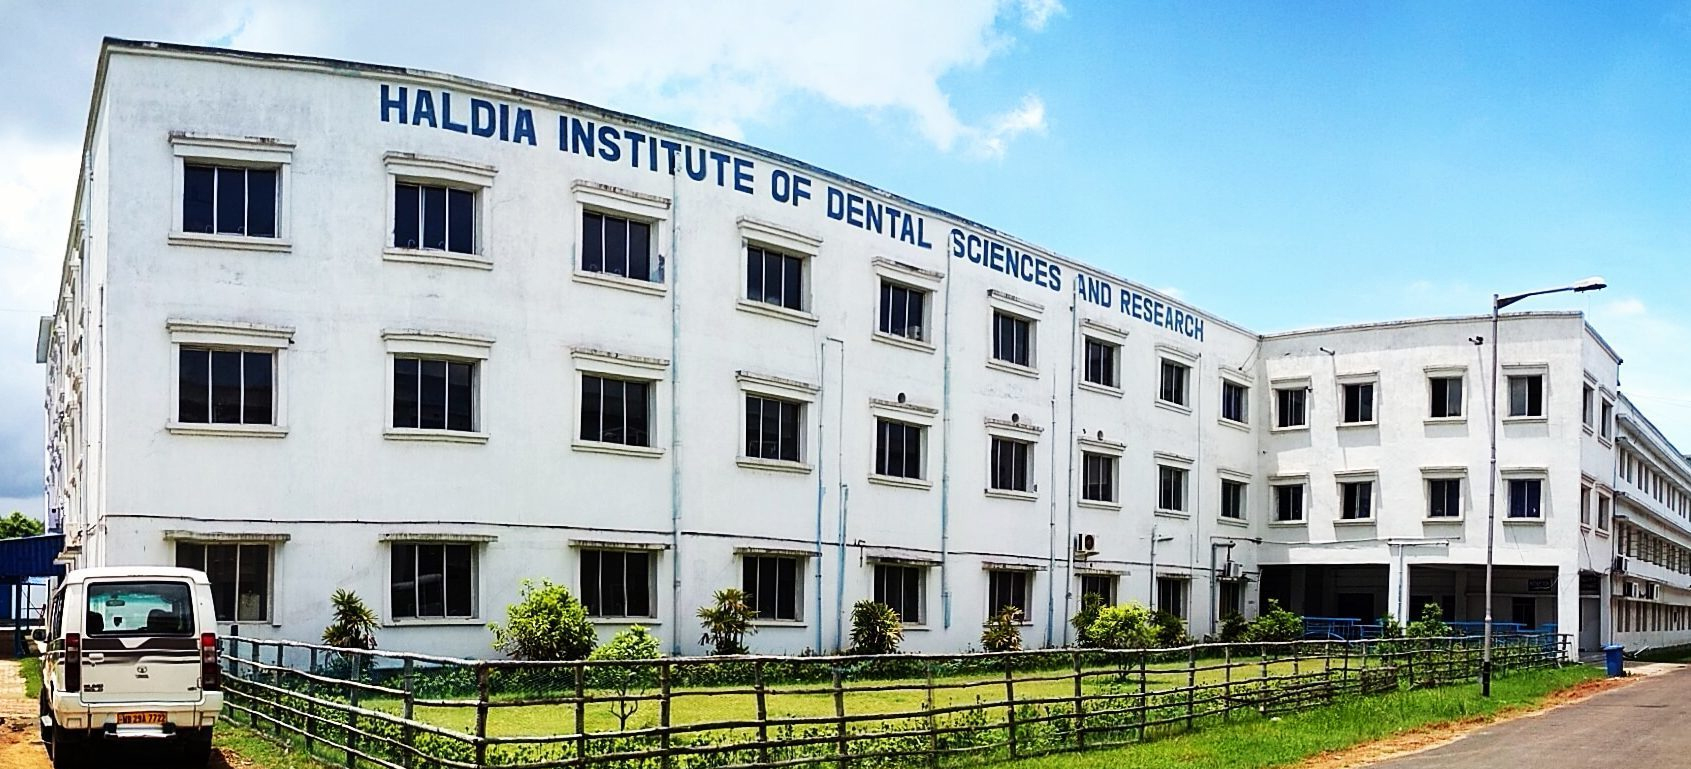 Haldia Institute of Dental Sciences and Research, Banbishnupur